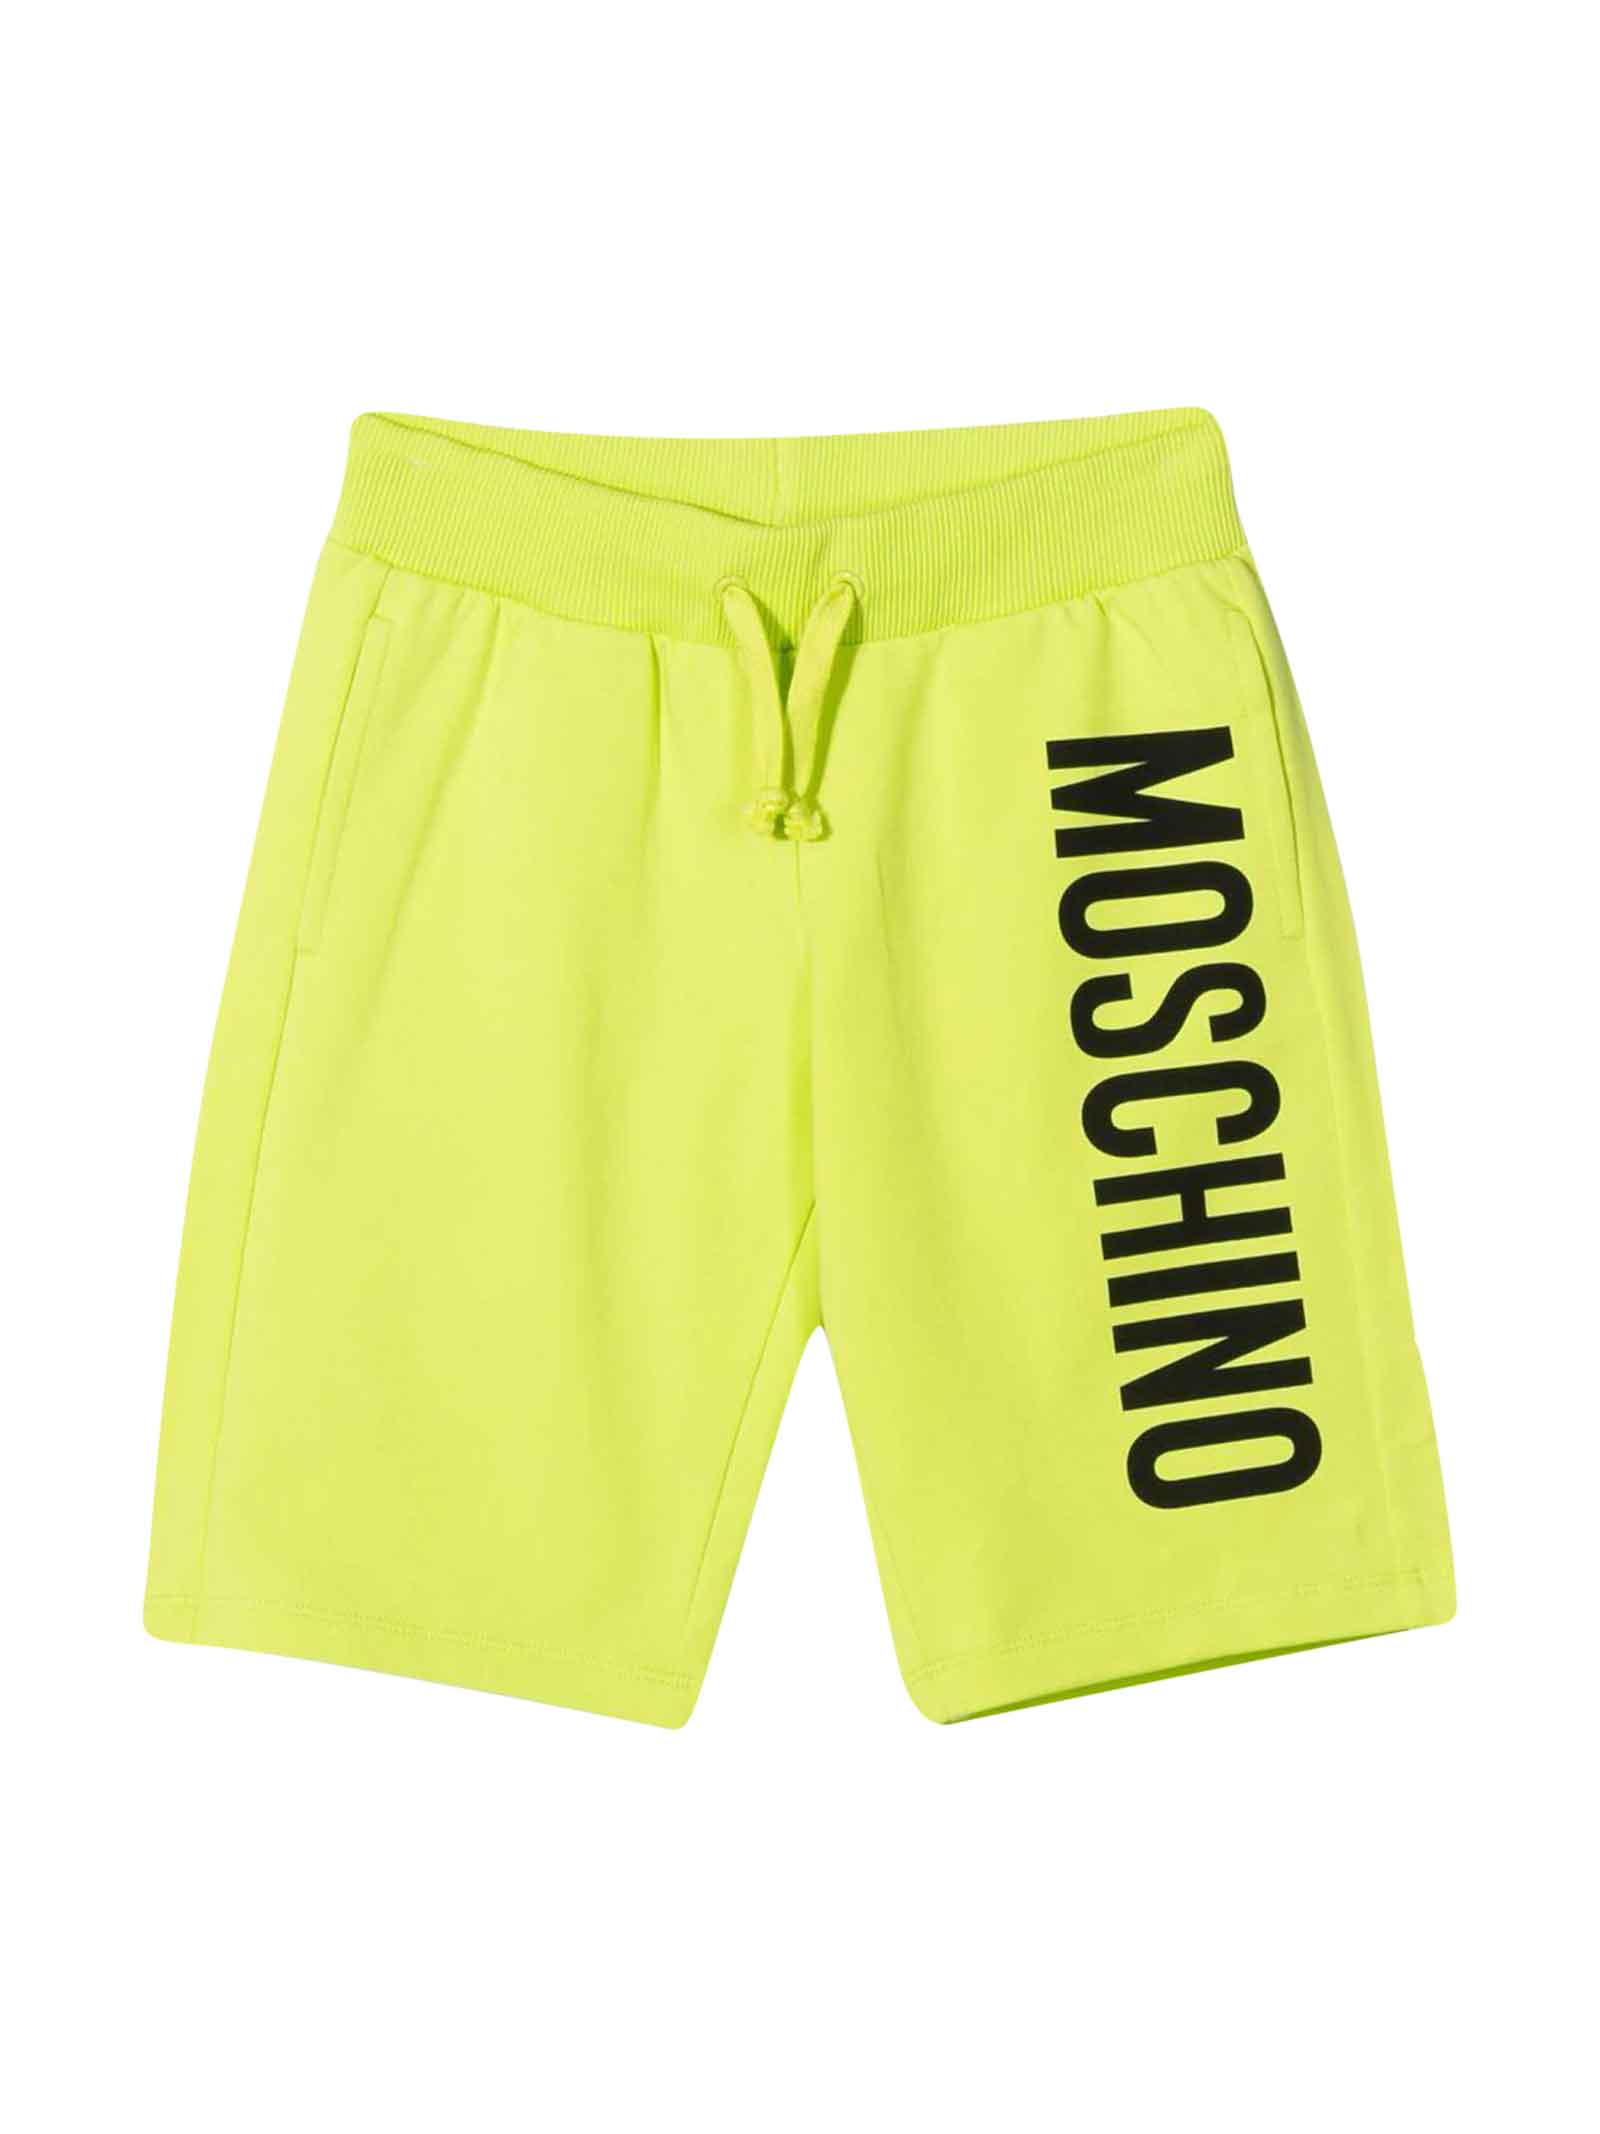 Moschino Yellow Bermuda Shorts With Black Logo